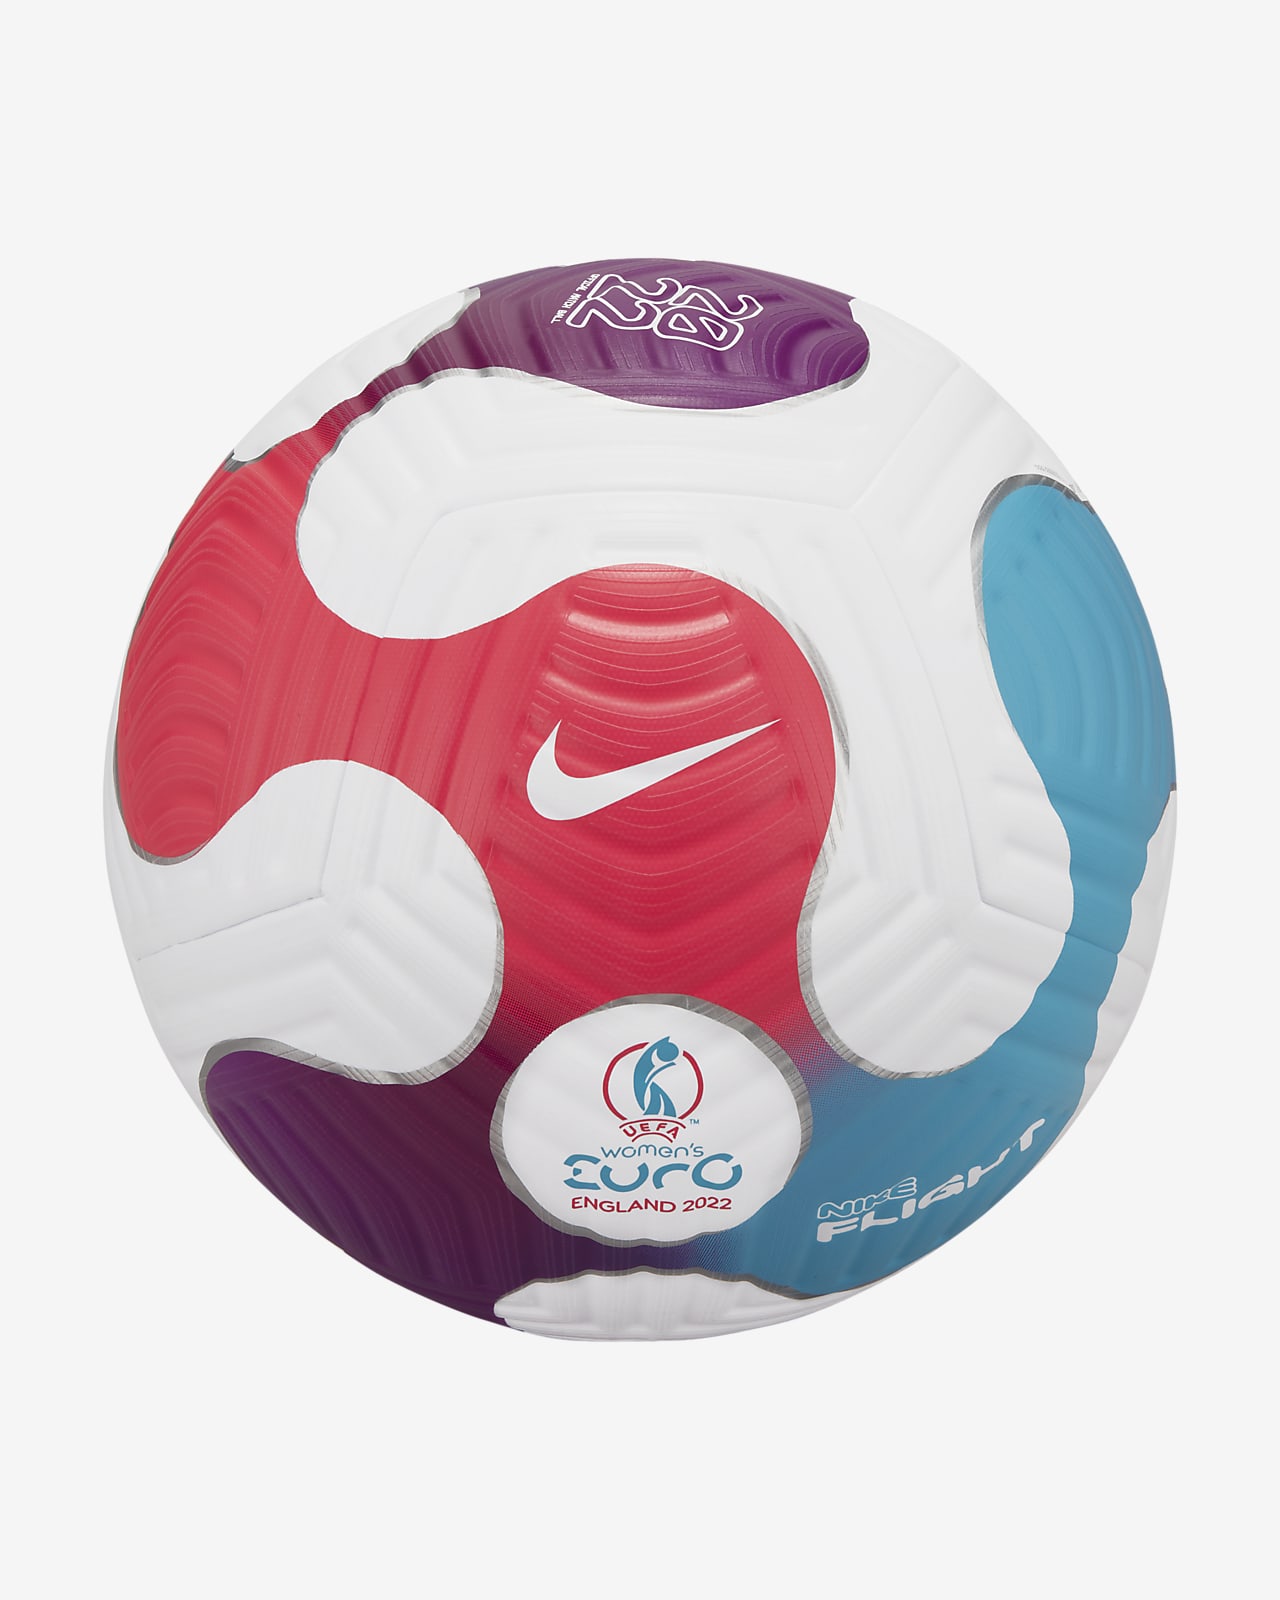 UEFA Women's EURO 2022 Nike Flight Soccer Ball